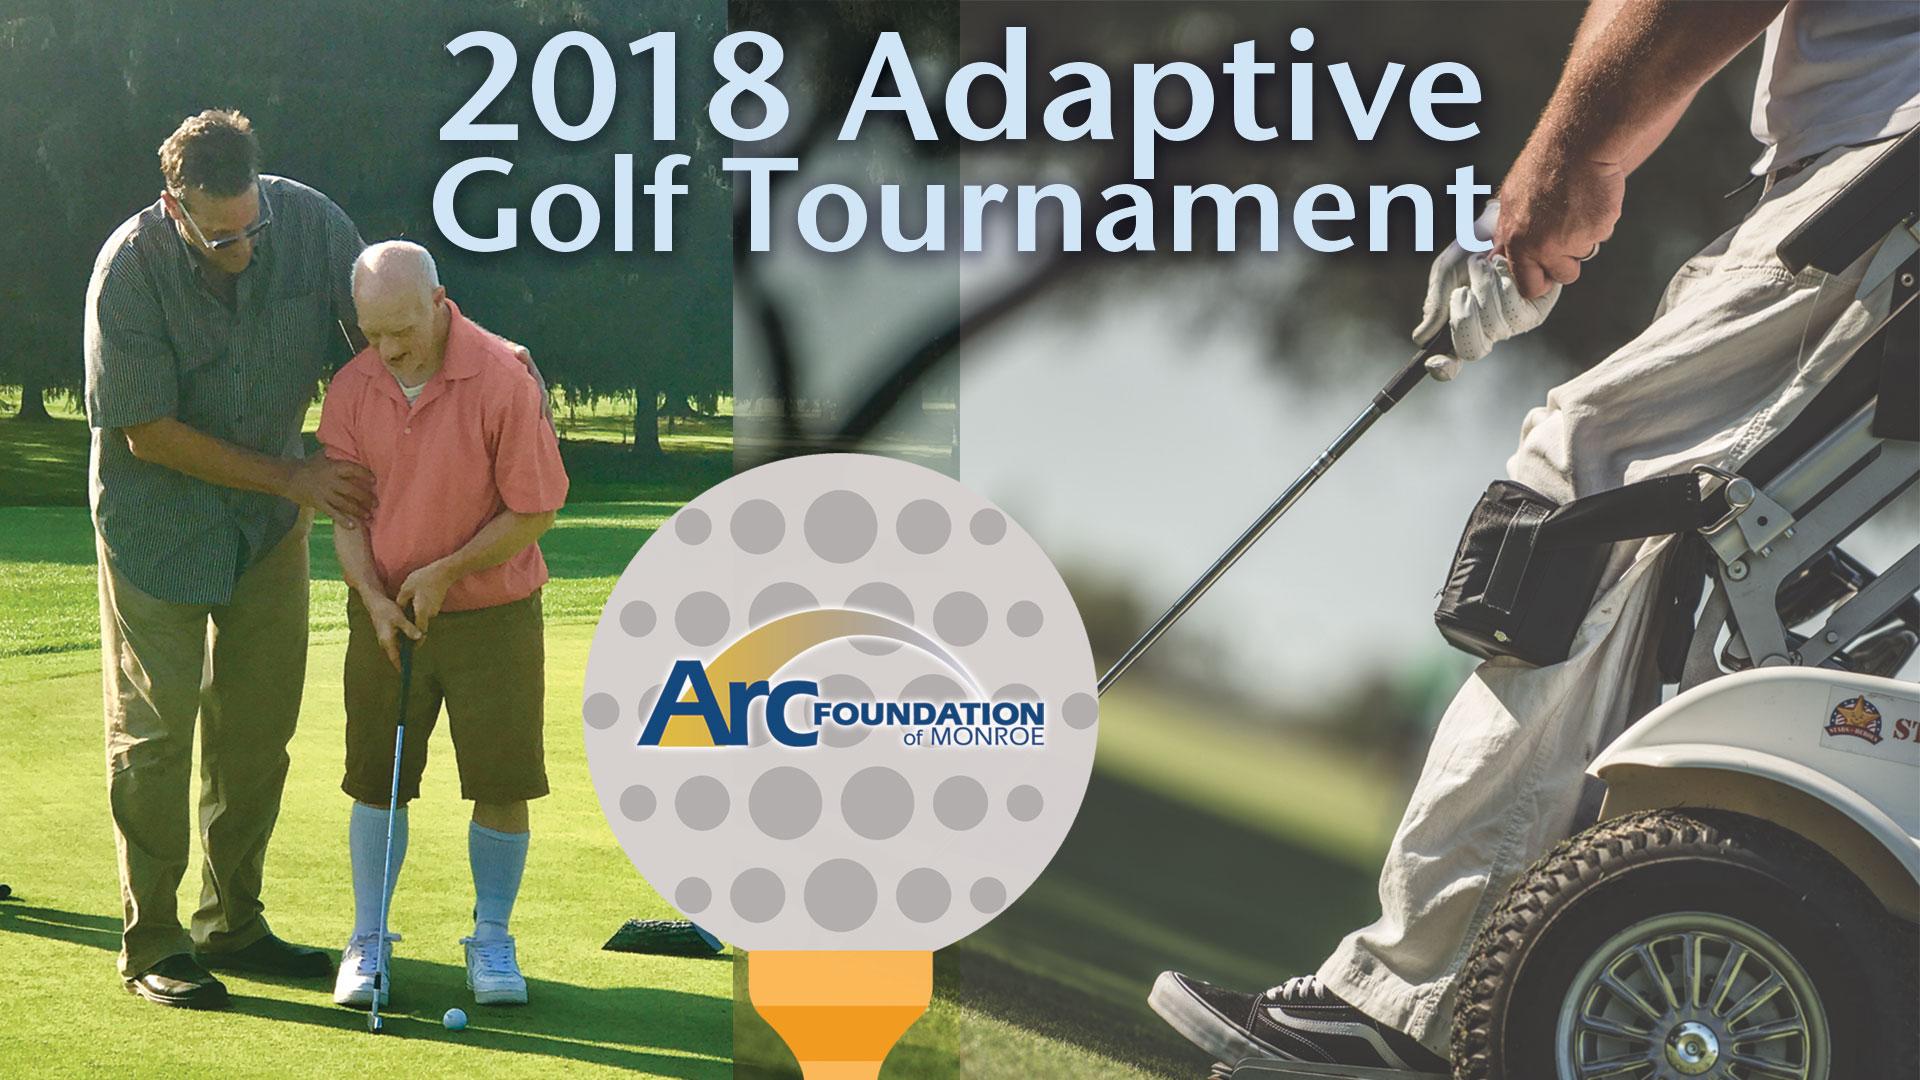 2018 Arc Foundation of Monroe's Adaptive Golf Tournament